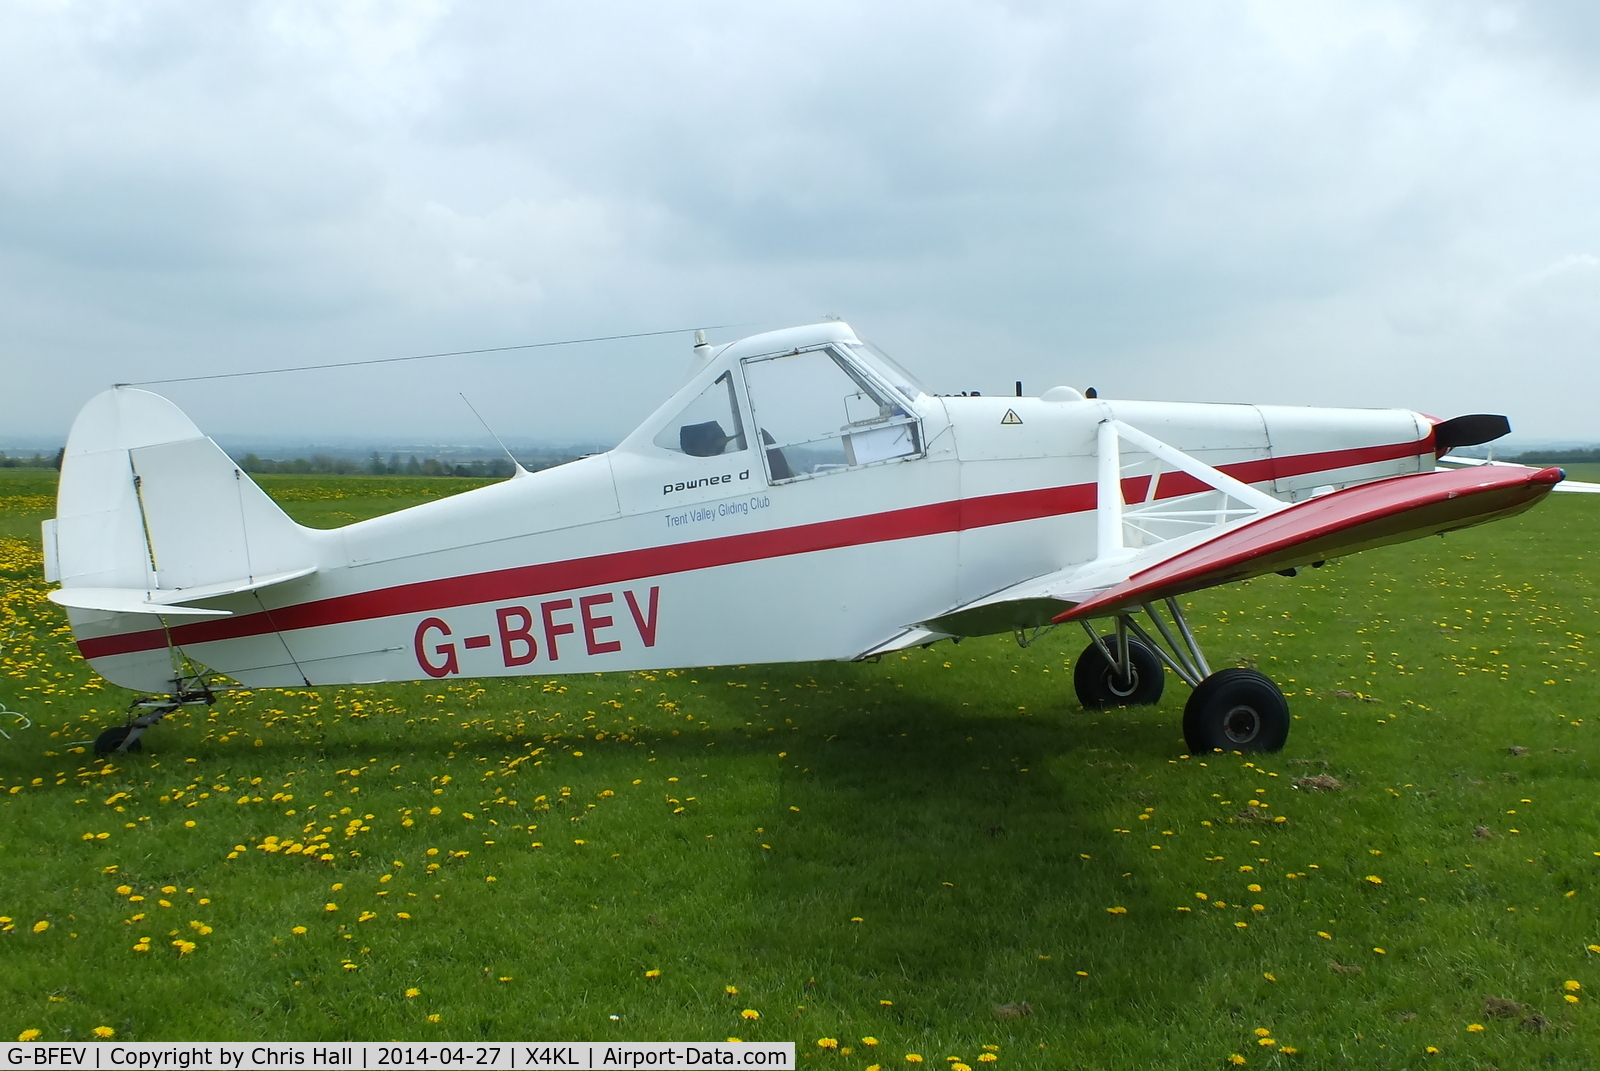 G-BFEV, 1977 Piper PA-25-235 Pawnee C/N 25-7756060, Trent Valley Gliding Club, Kirton in Lindsay